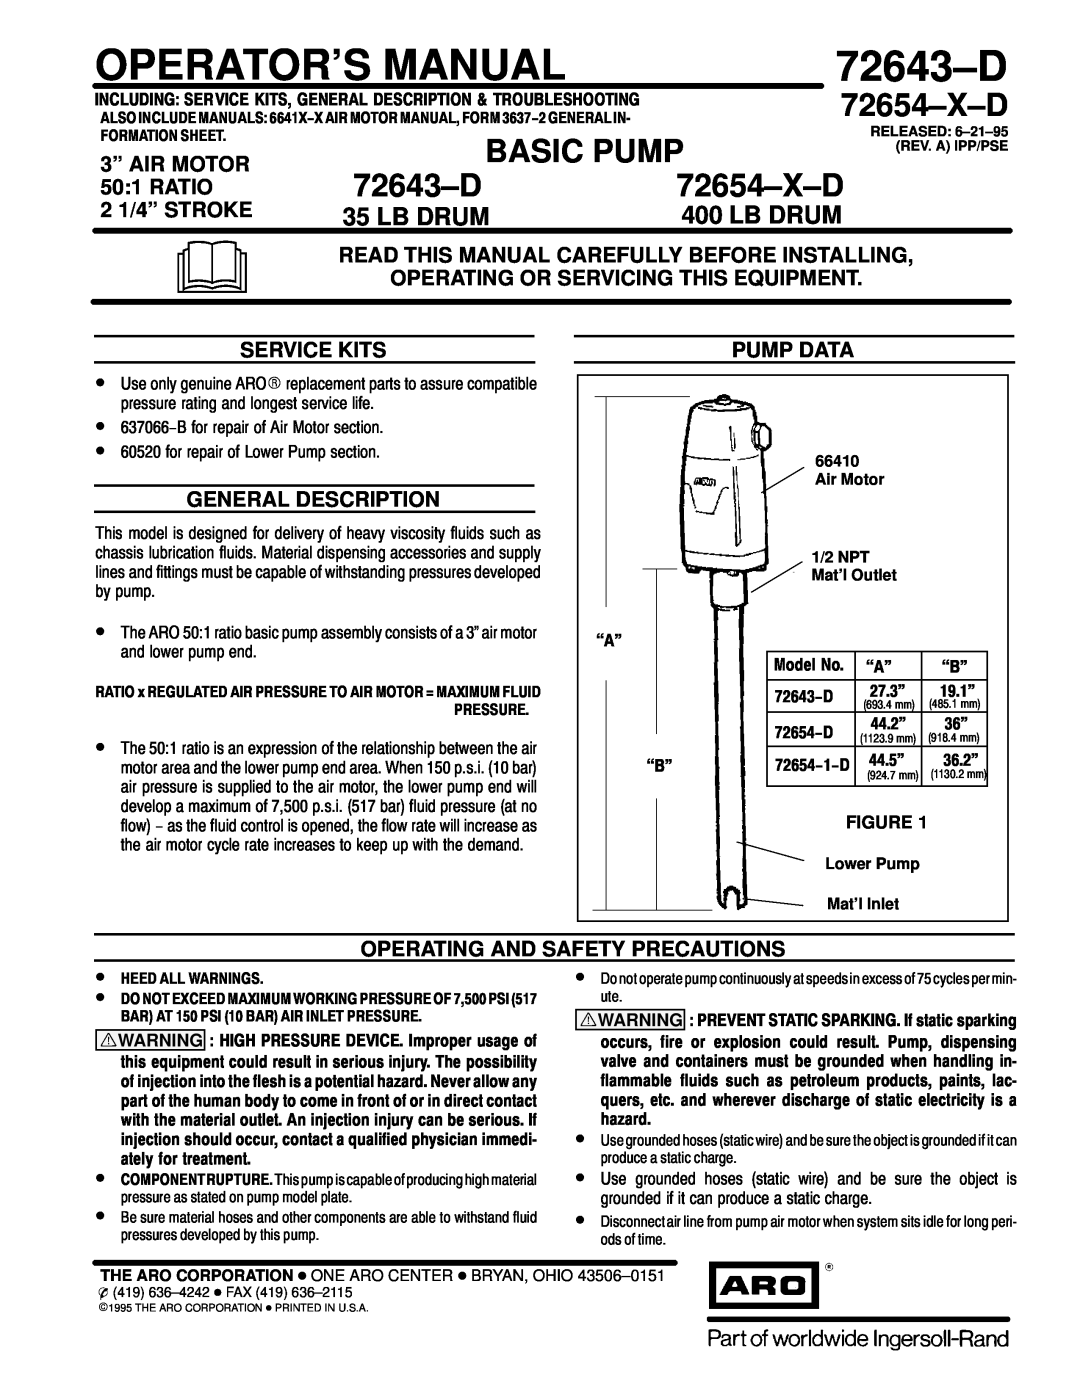 Ingersoll-Rand 72643D manual 3” AIR MOTOR, 50 1 RATIO, 2 1/4” STROKE, Read This Manual Carefully Before Installing 